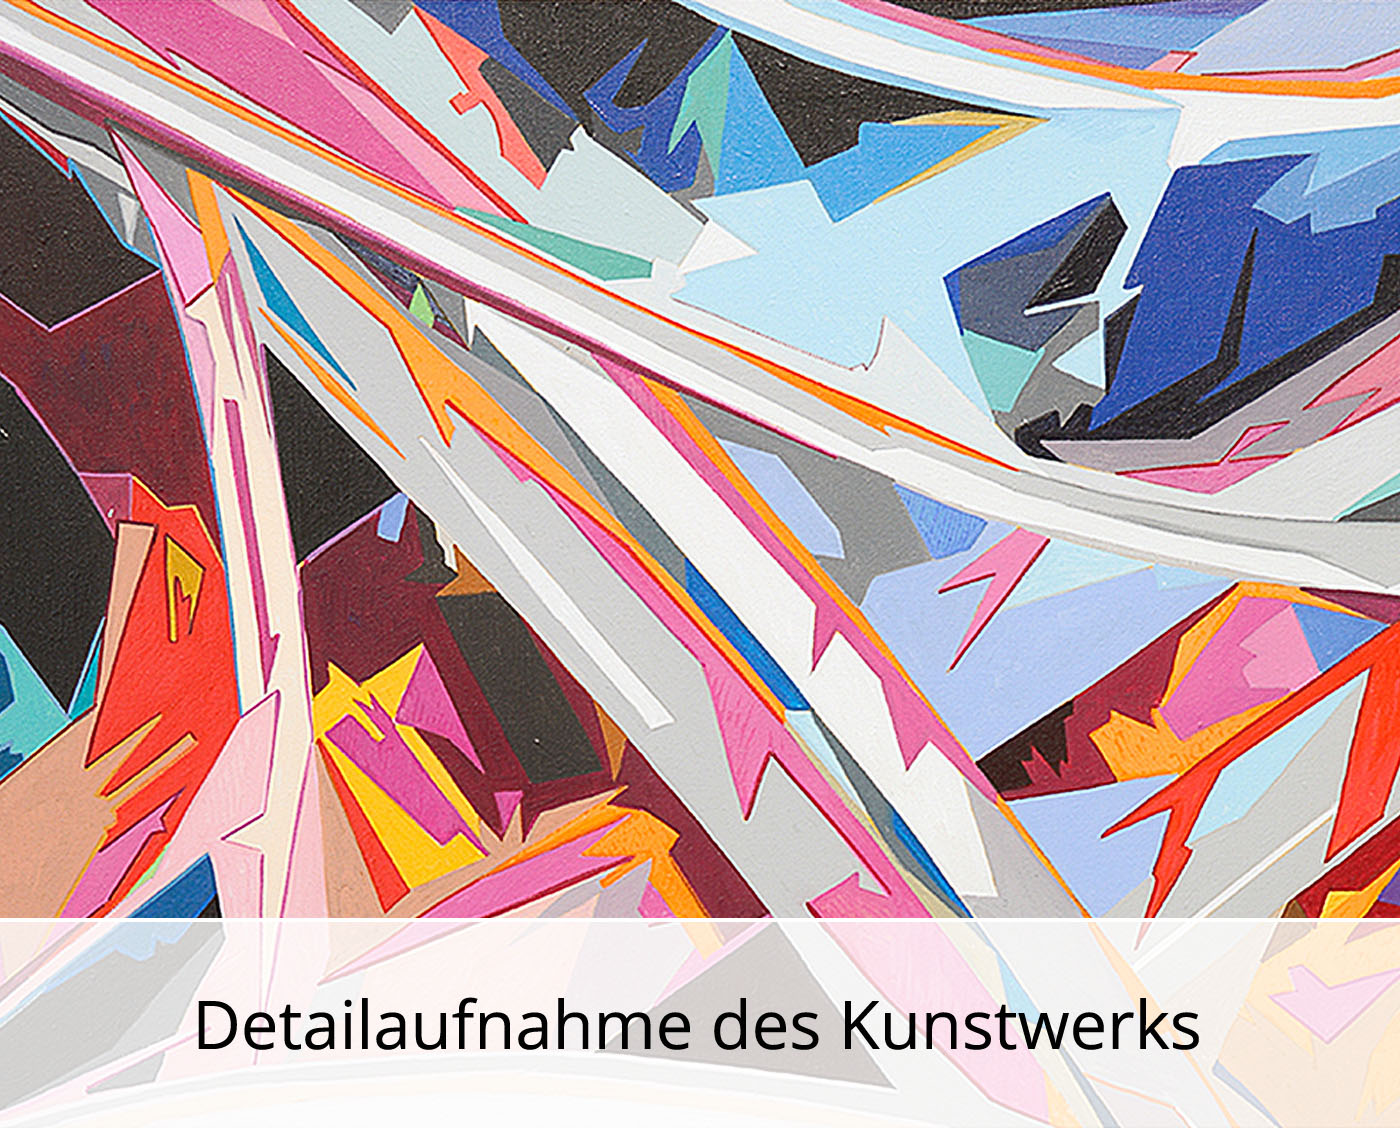 U. Fehrmann: "Always and everywhere III", Edition, signierter Kunstdruck auf Leinwand